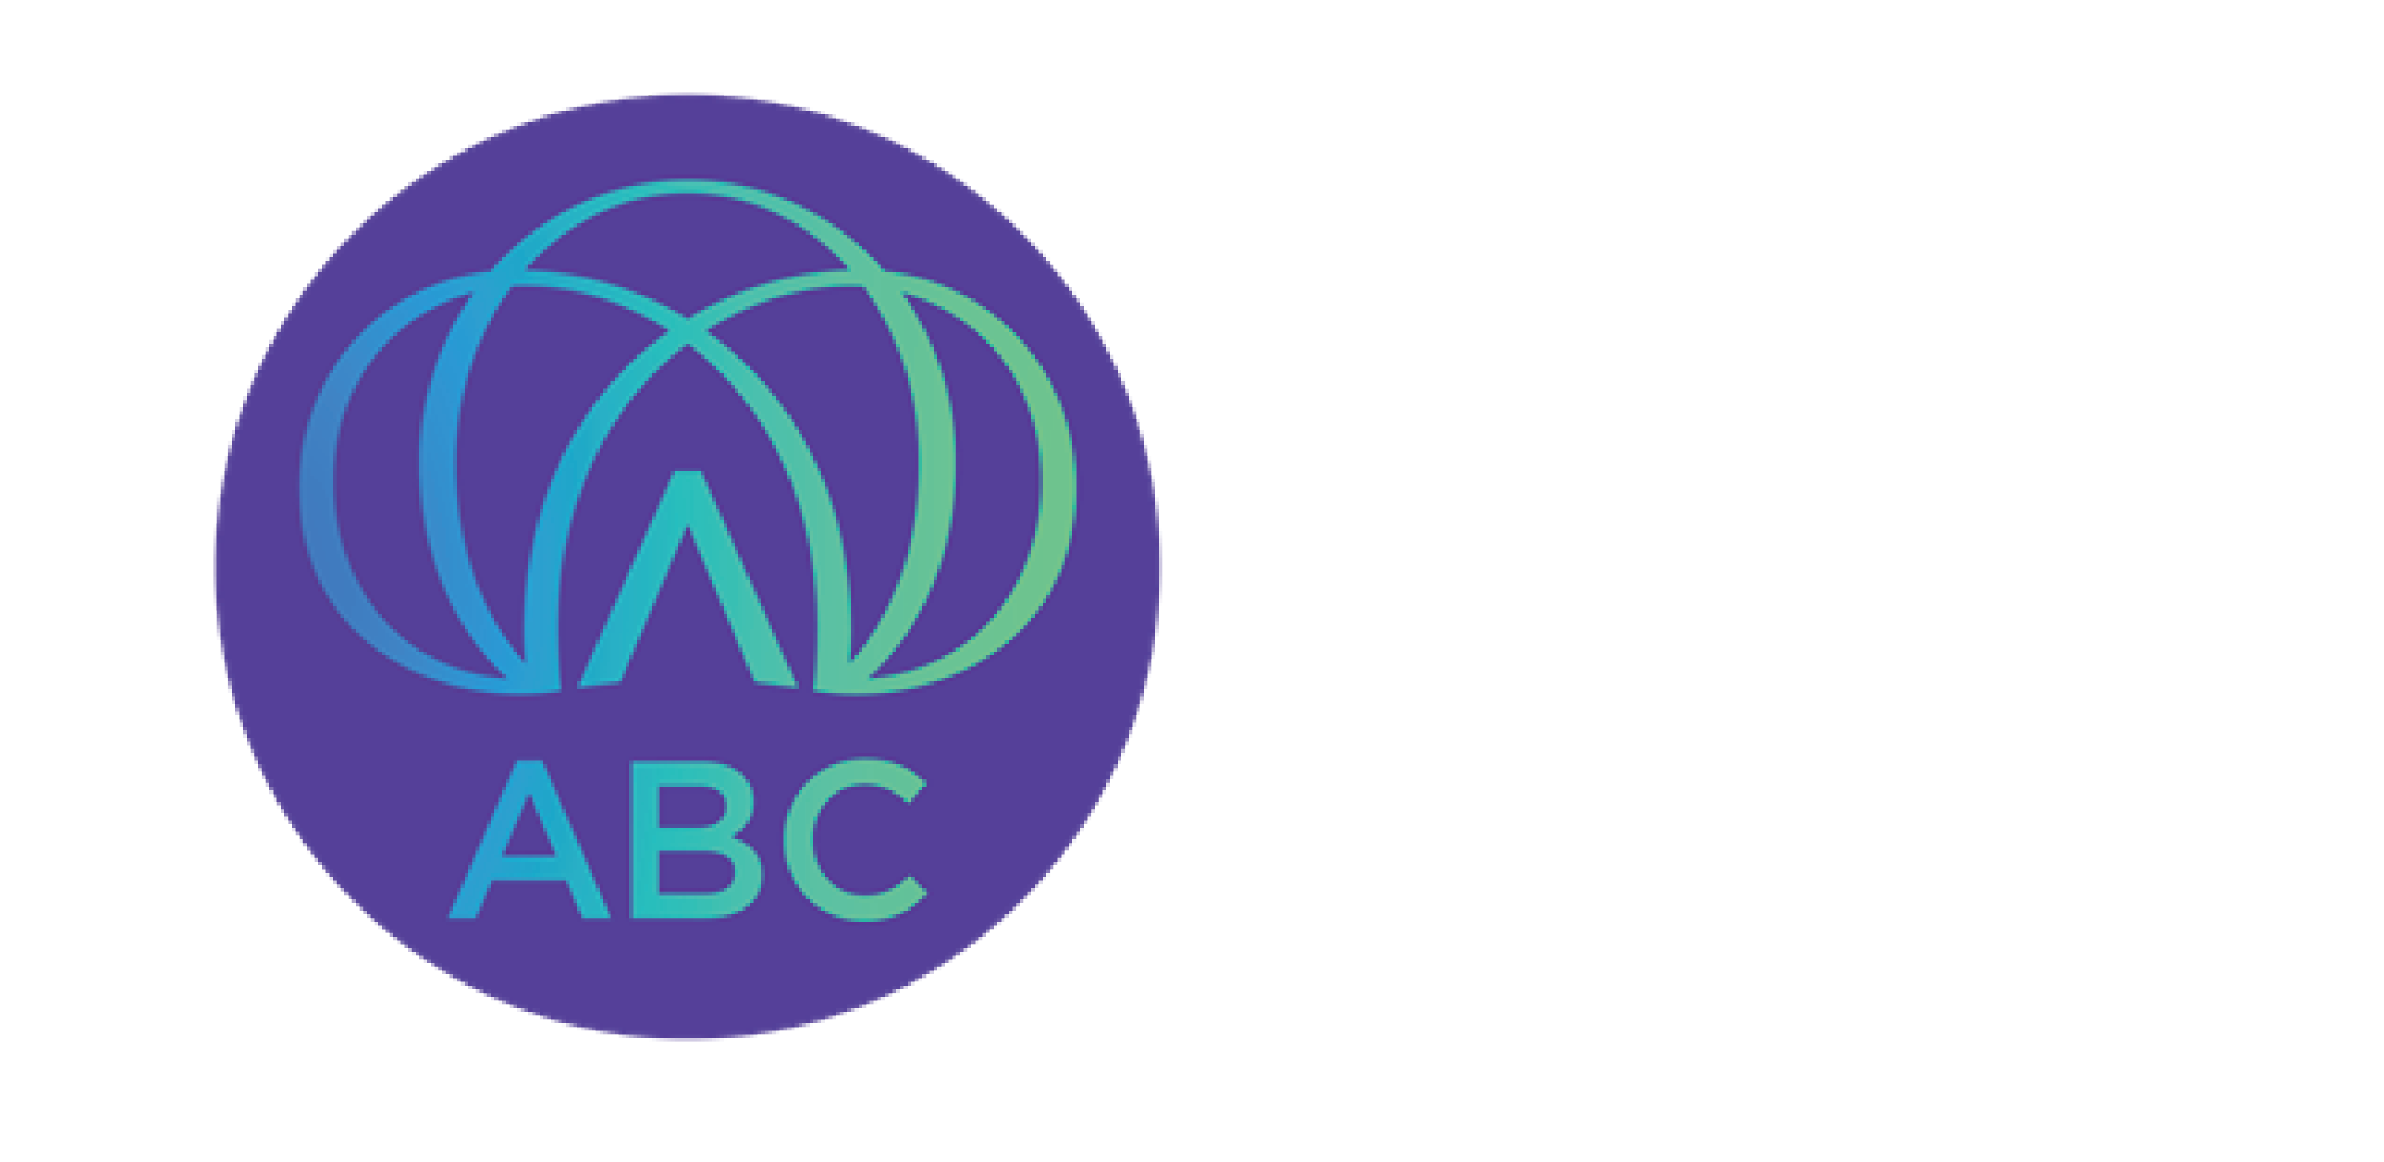 Apeejay Business Centre